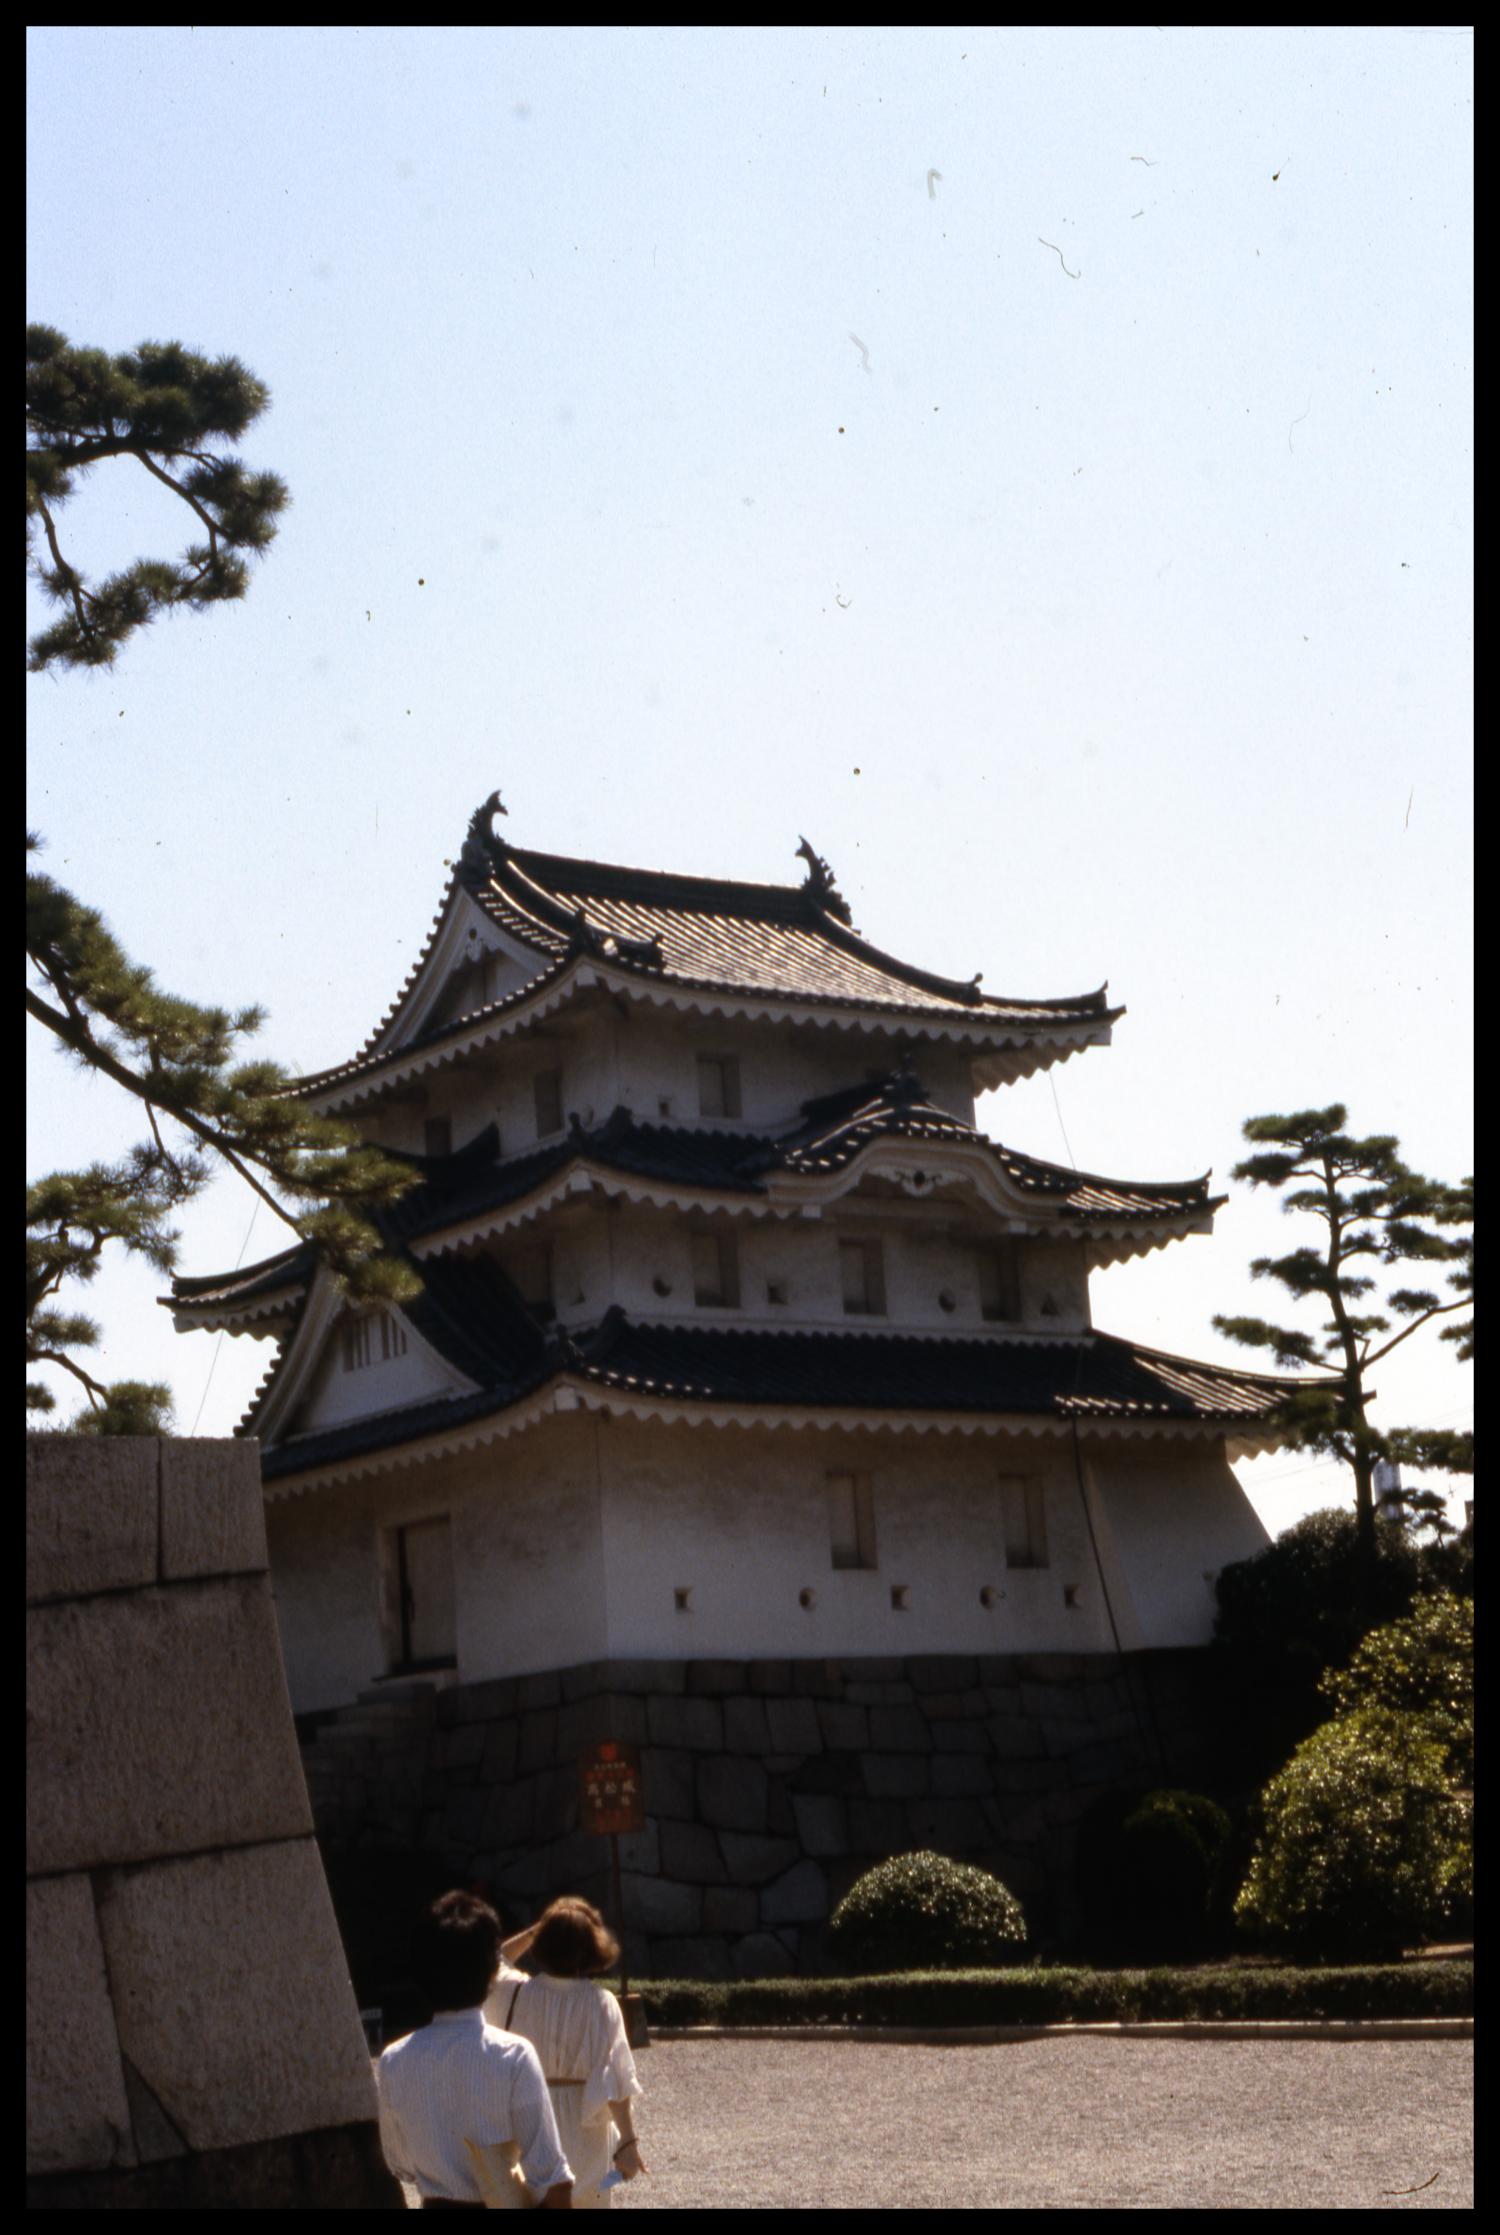 [Takamatsu Castle]
                                                
                                                    [Sequence #]: 1 of 1
                                                